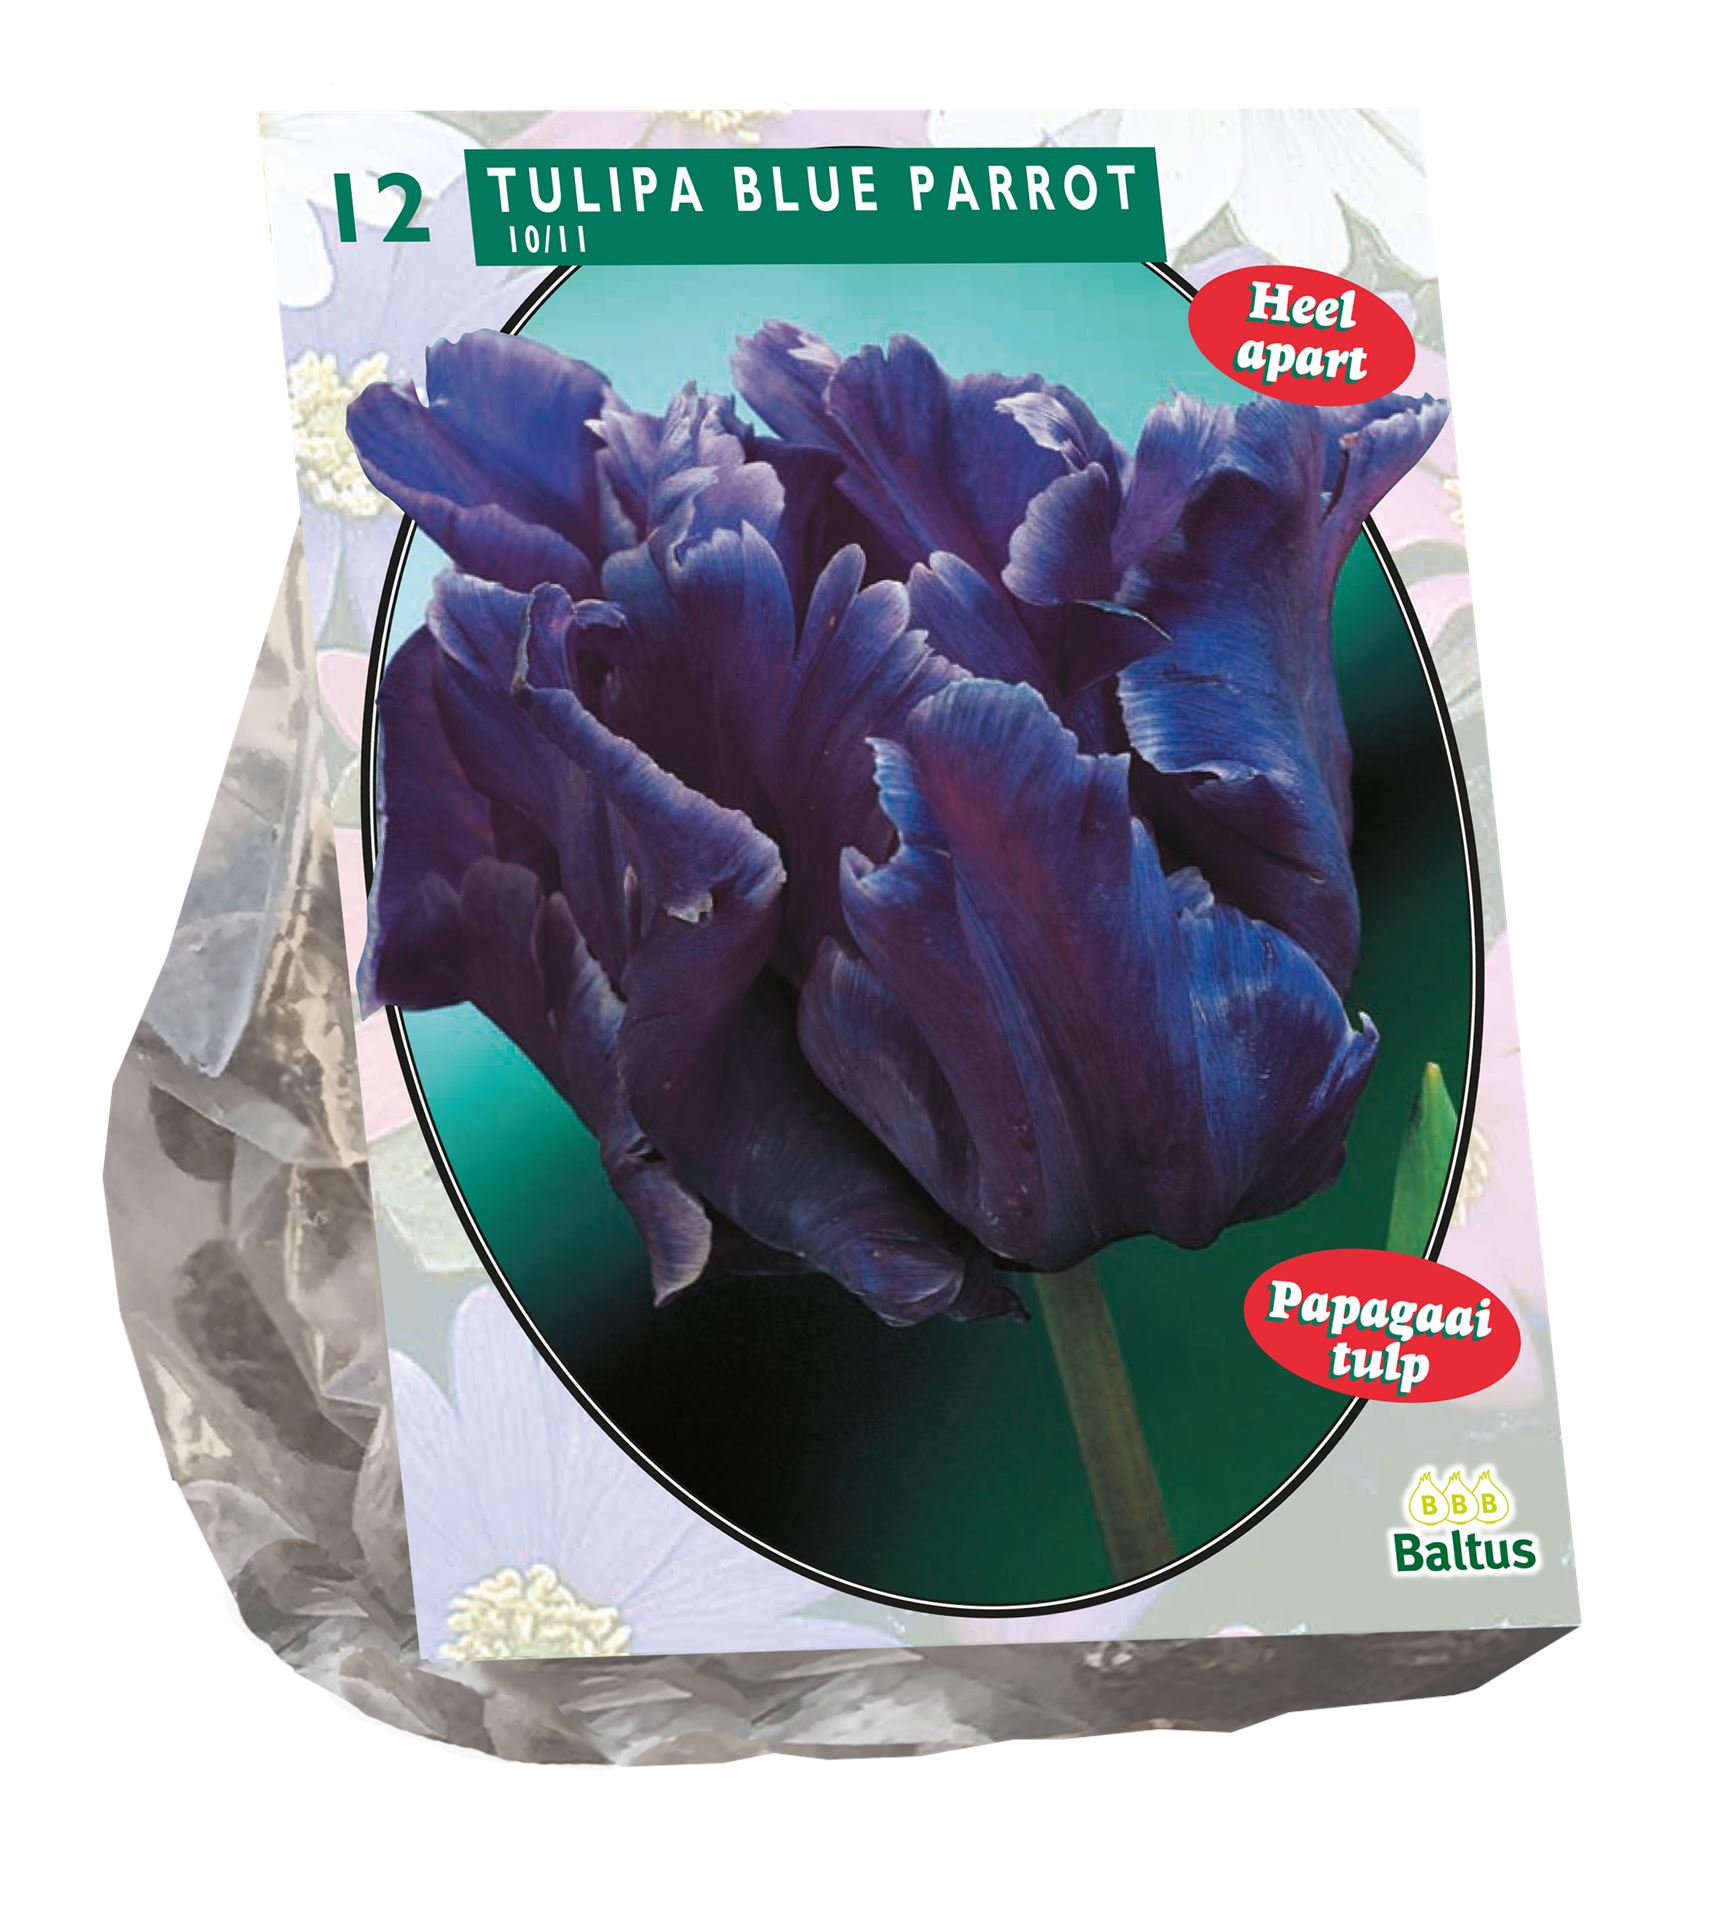 Tulipa-Blue-Parrot-Parkiet-per-12